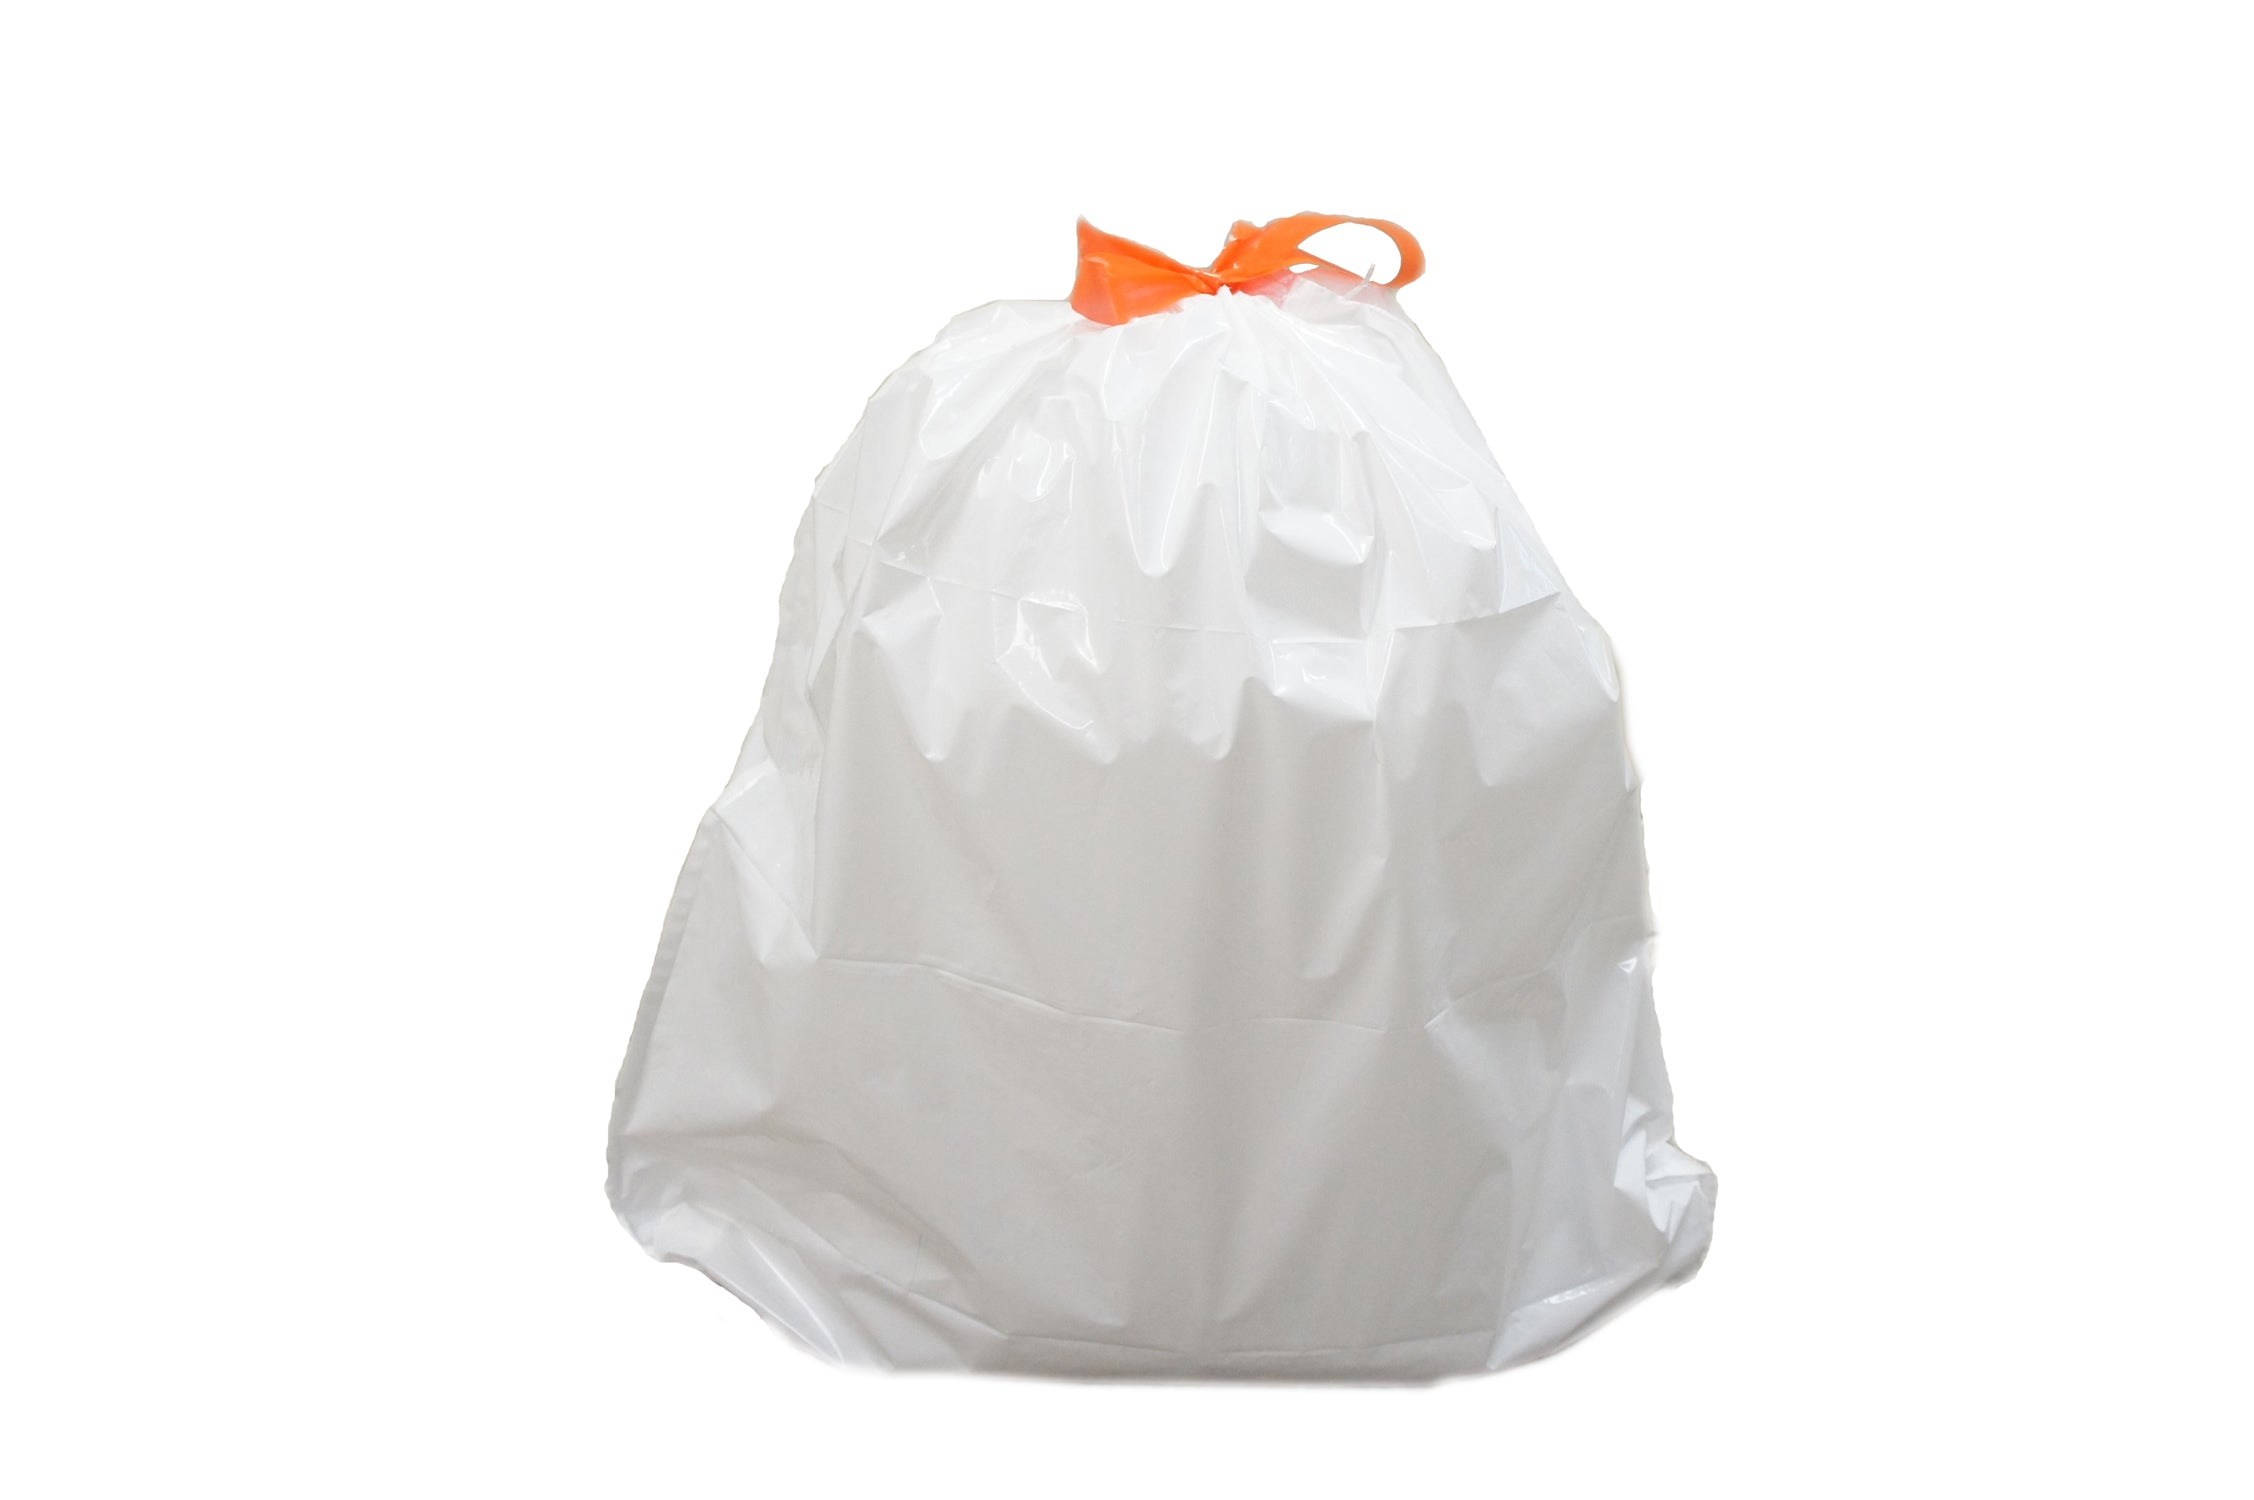 Hercules 4 gallon trash bags - 100 clear garbage bags for bathroom